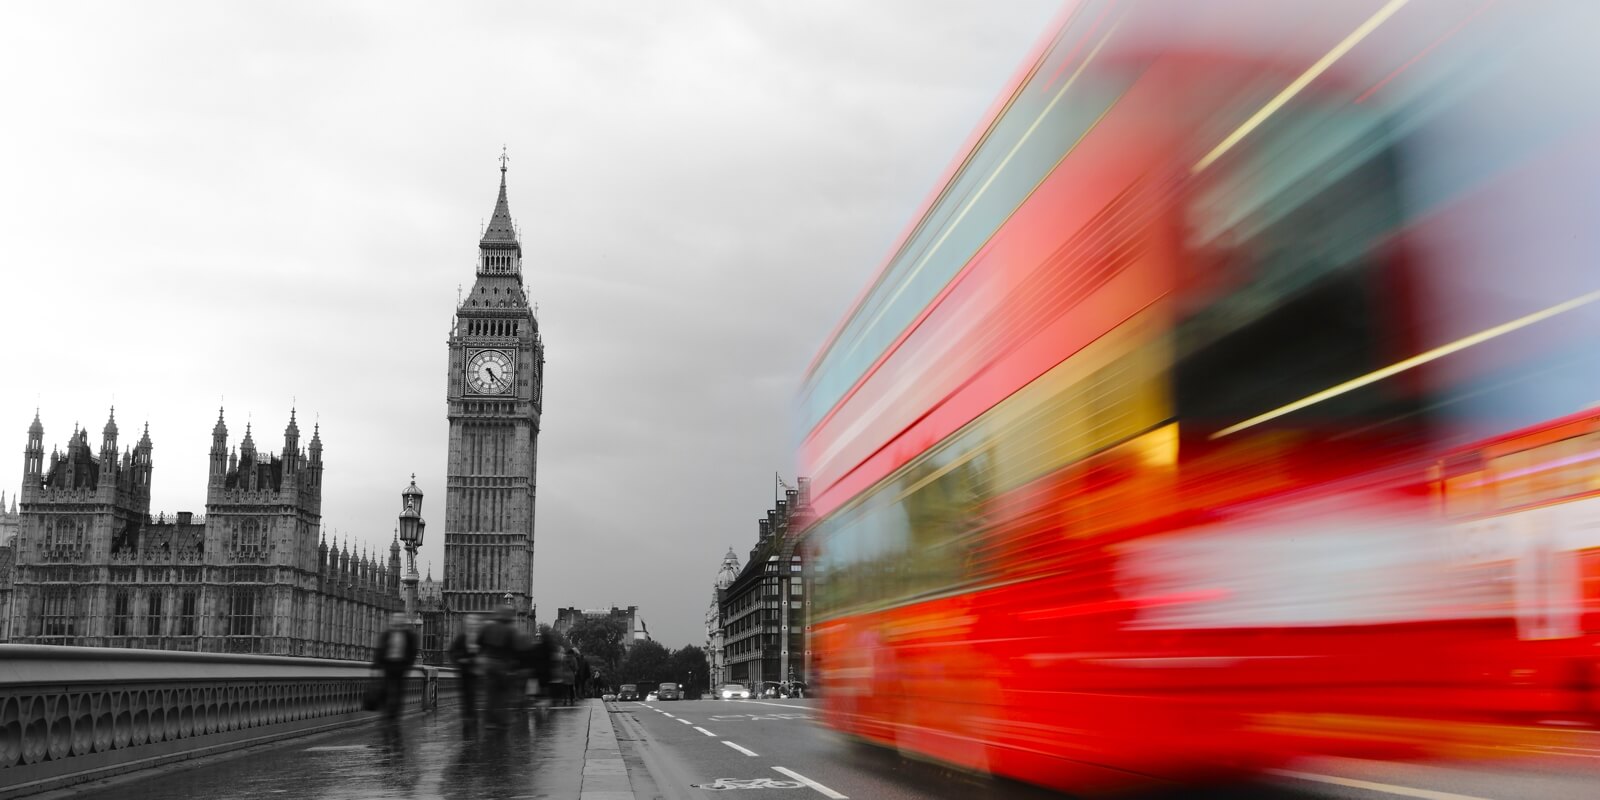 Vlies Tapete XXL Poster Fototapete London Big Ben red Bus